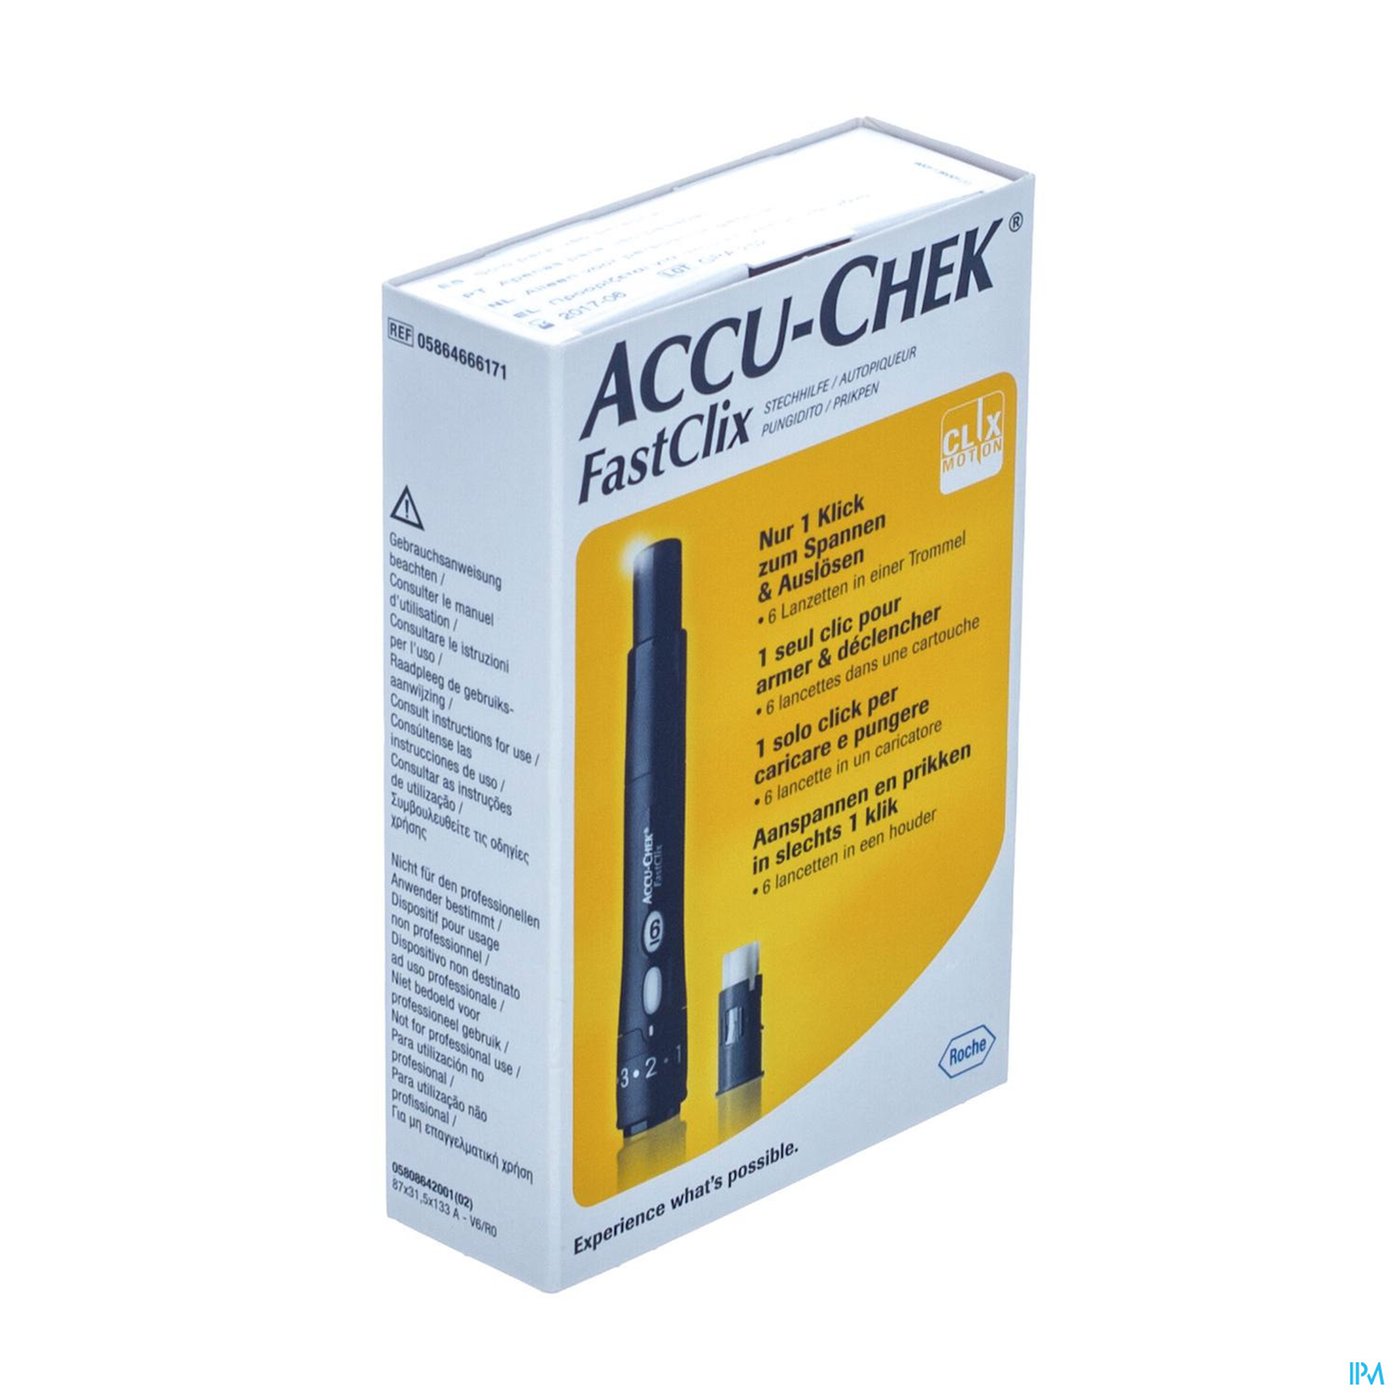 Accu Chek Fastclix (prikker+lancet 1x6)05864666171 packshot